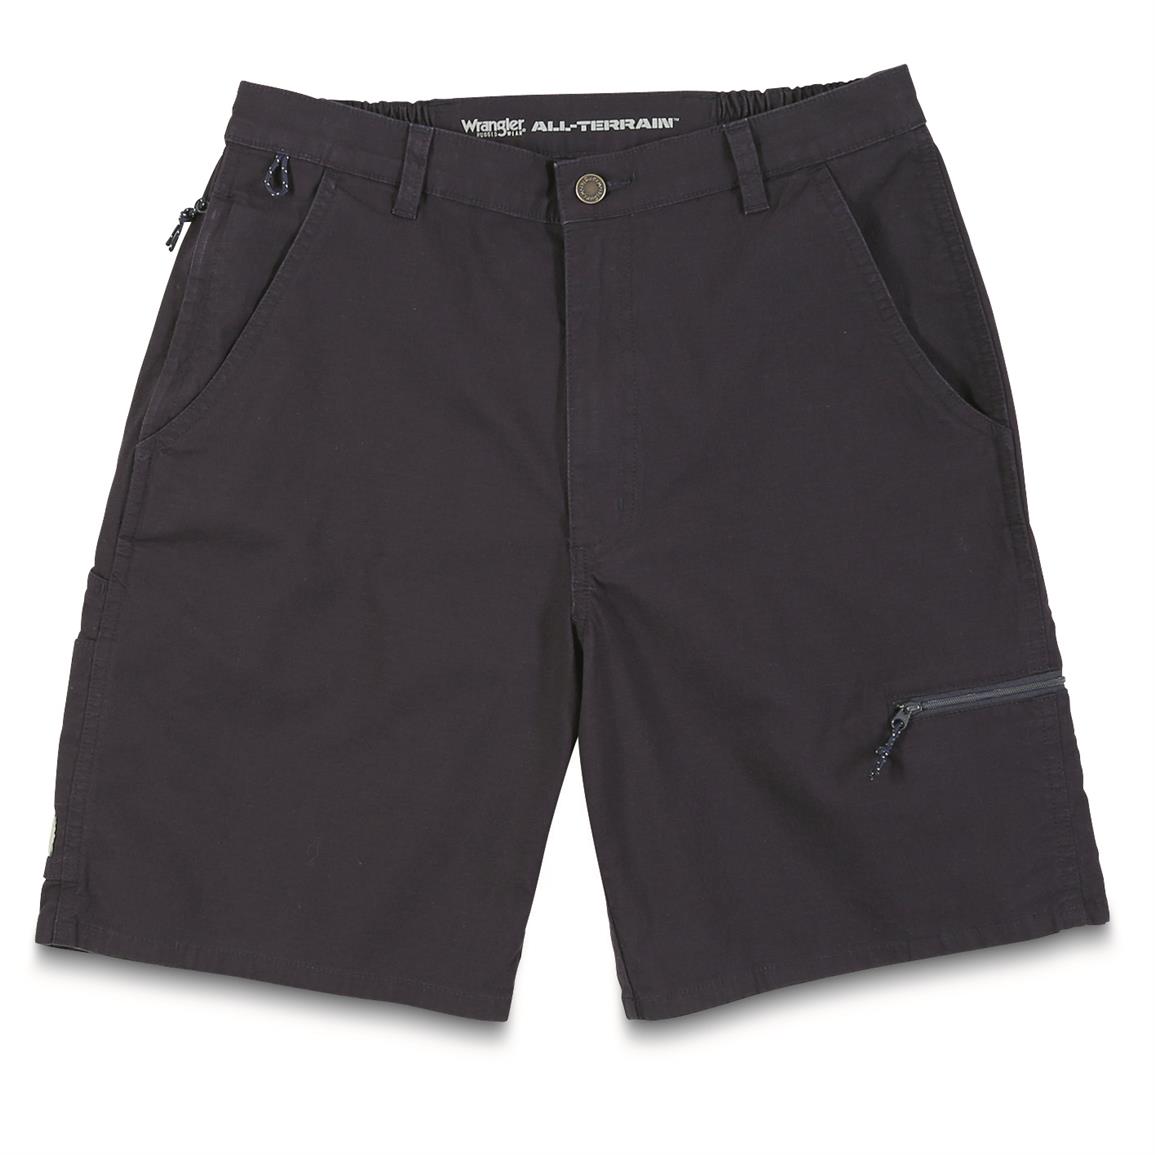 Wrangler Men's Linecaster Shorts - 676409, Shorts at Sportsman's Guide